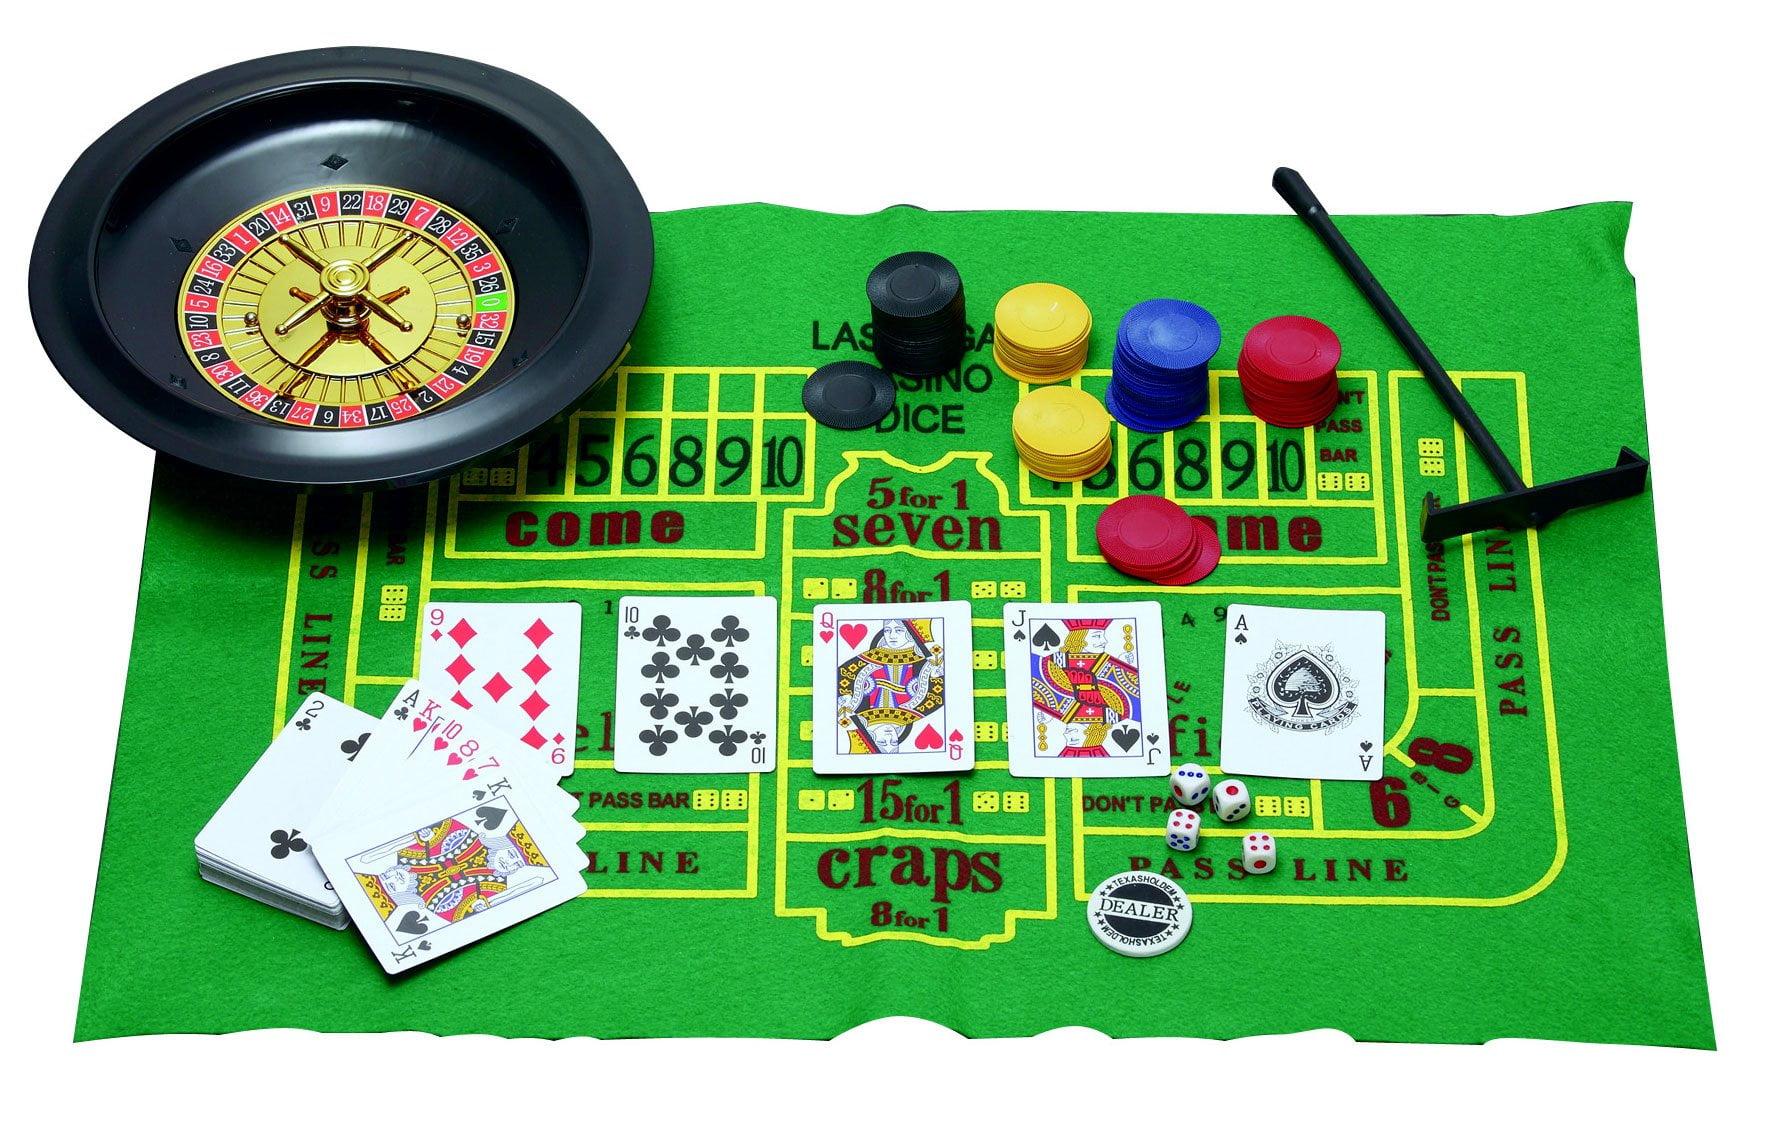 Table Top Roulette Casino Desktop Indoor Game Set Fun Games Toy Gift Idea 